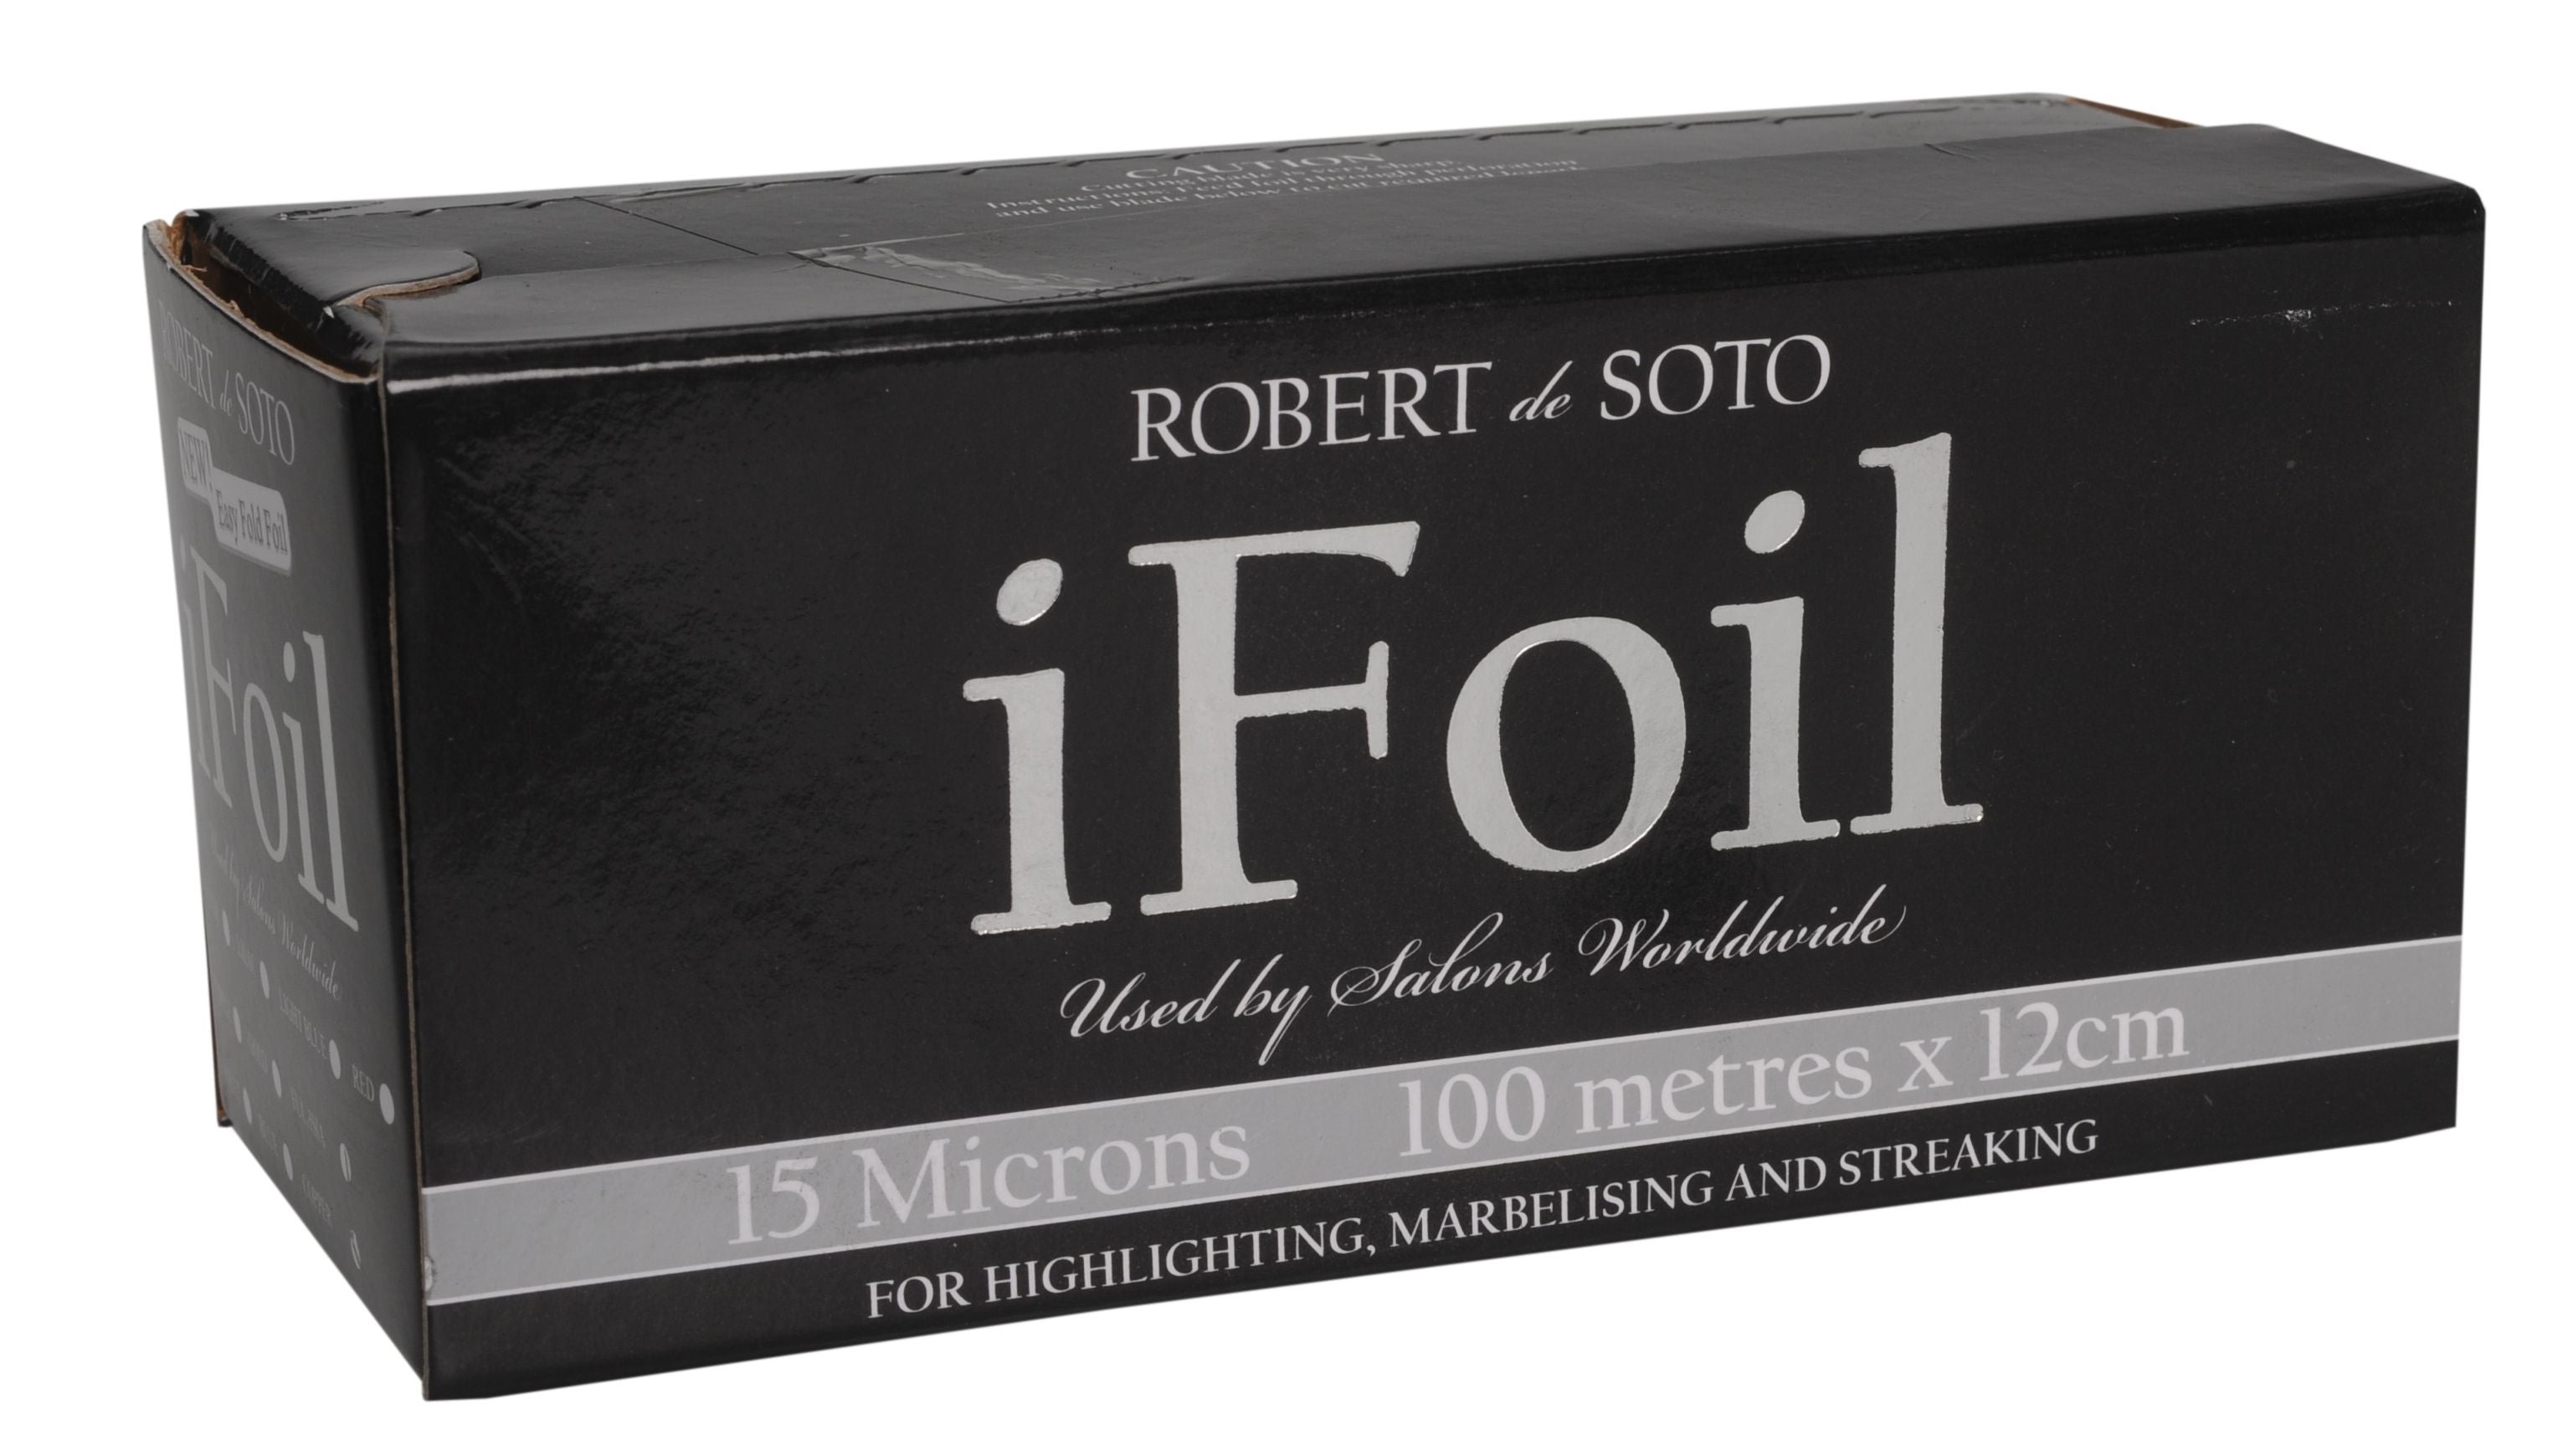 Robert DeSoto iFoil 15 Micron Foil 100m x 125mm - Purple